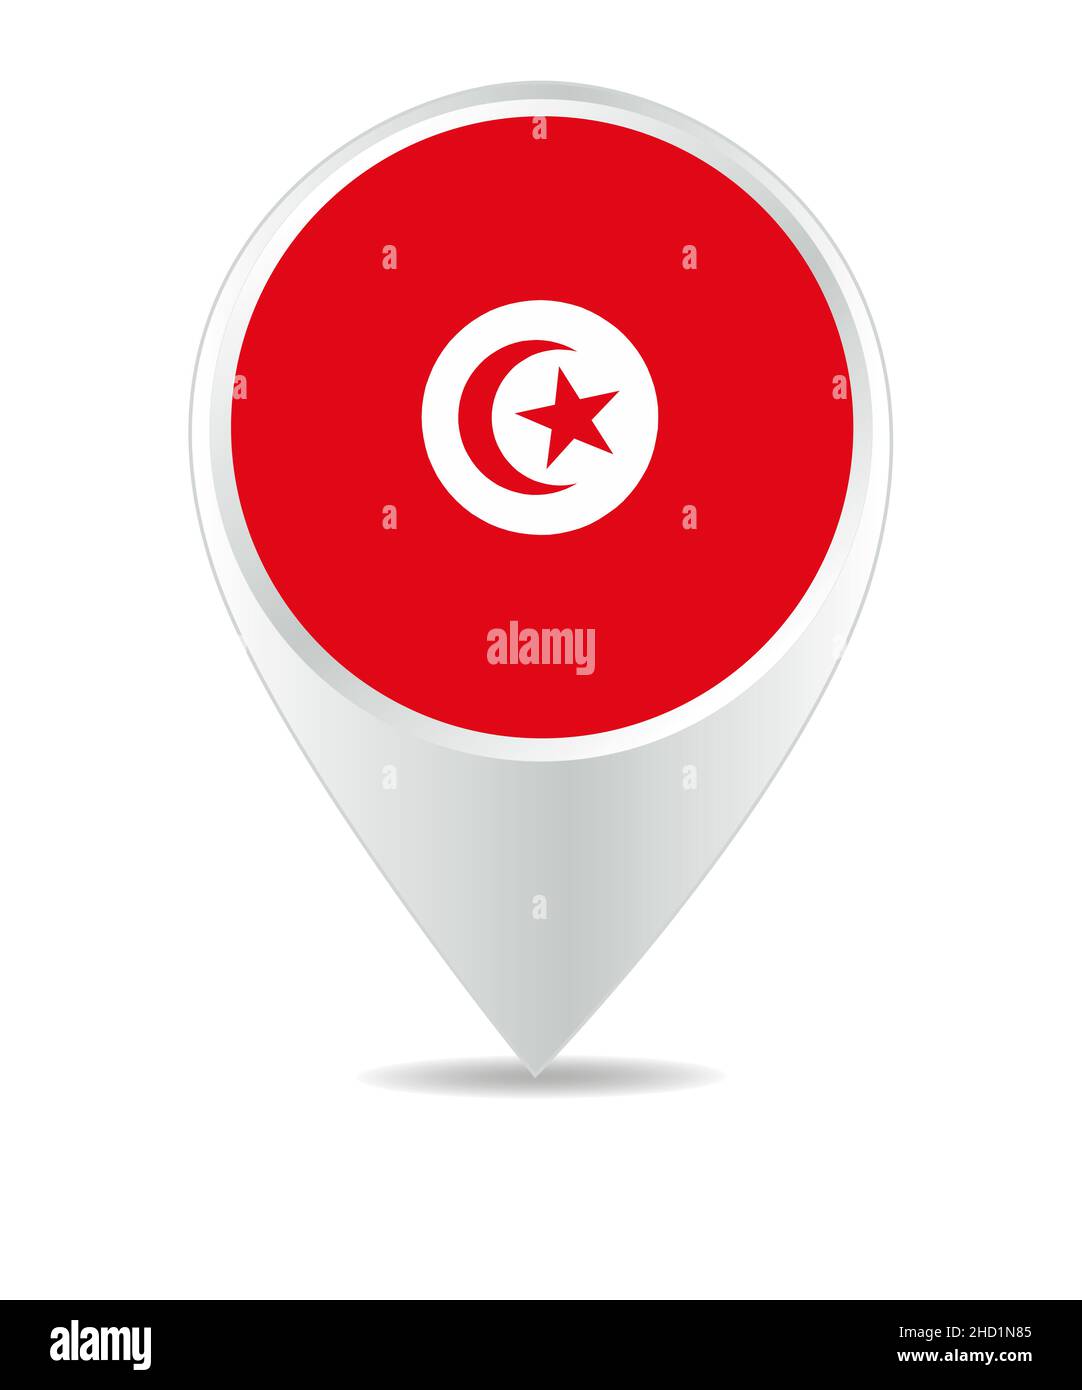 Location Icon for Tunisia Flag, Vector Stock Photo